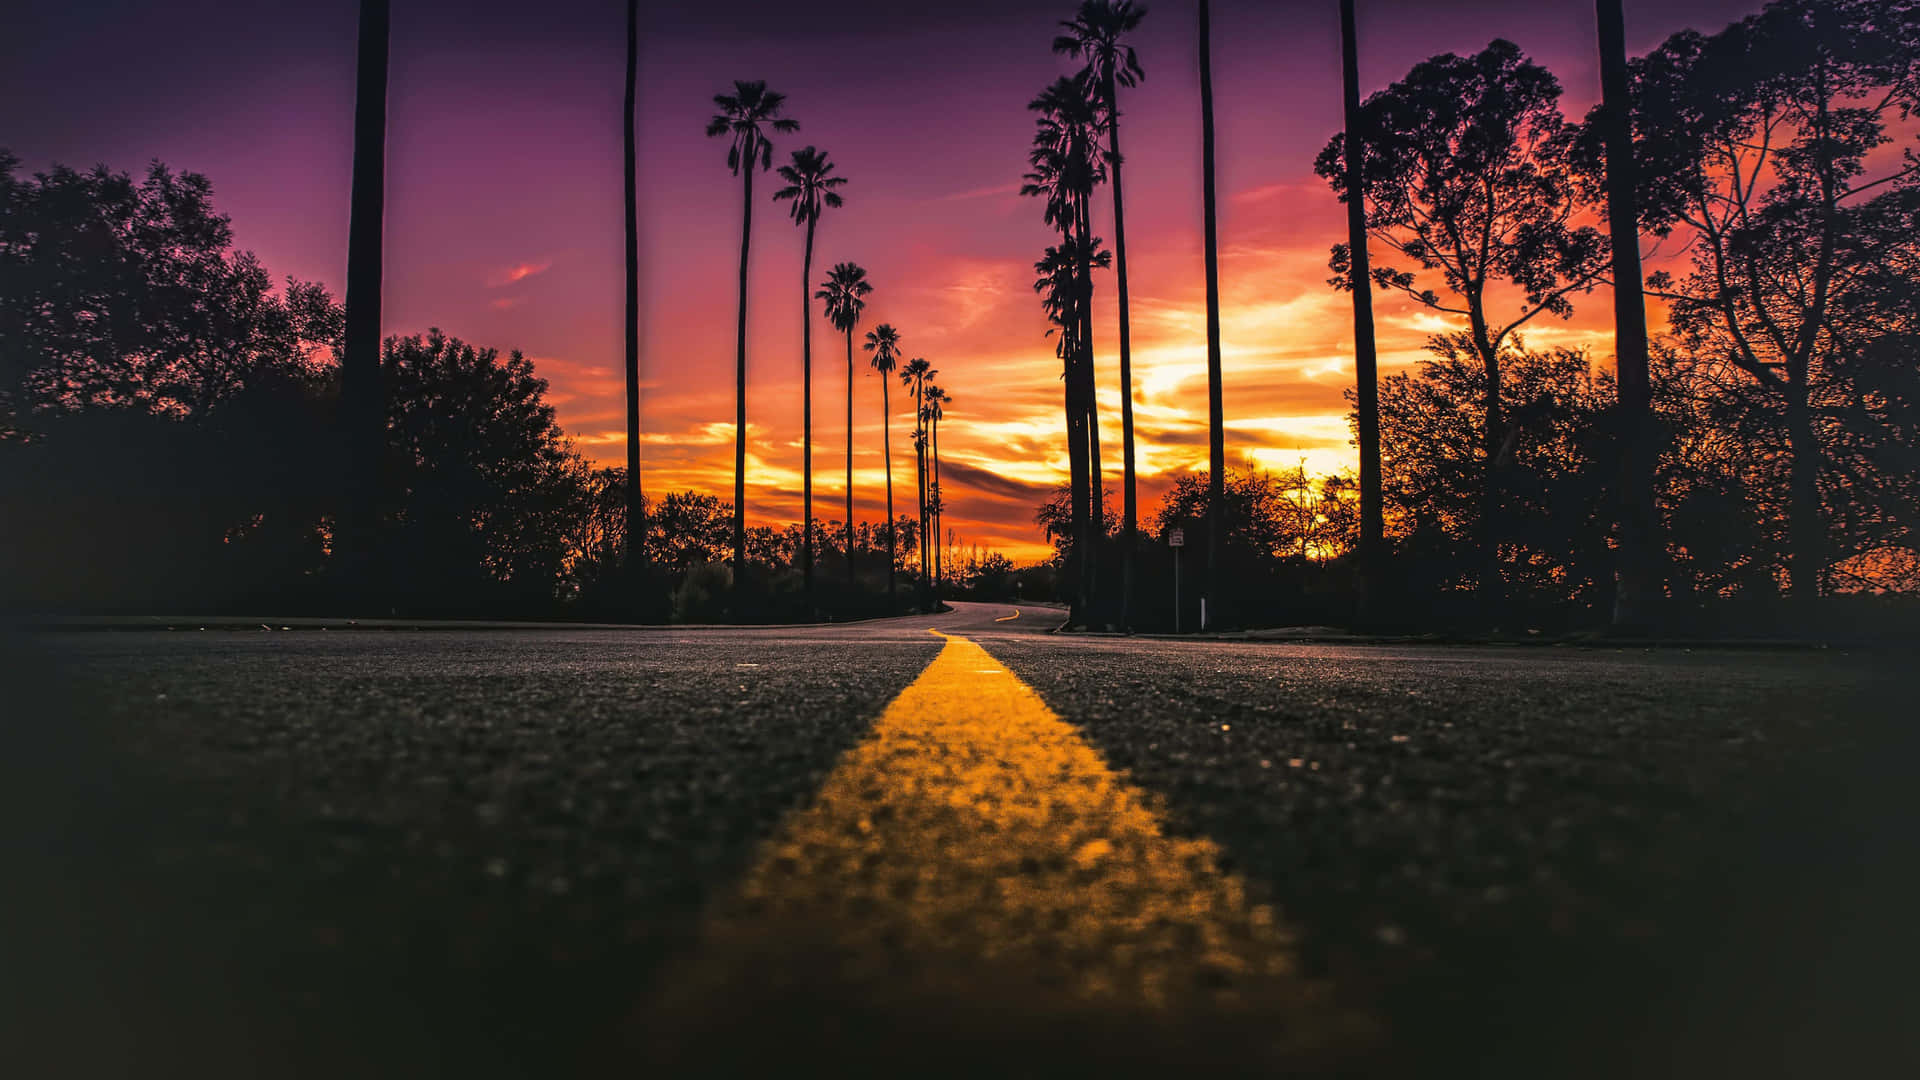 Bildwunderschöner Sonnenaufgang Über Los Angeles, Kalifornien, Usa Wallpaper